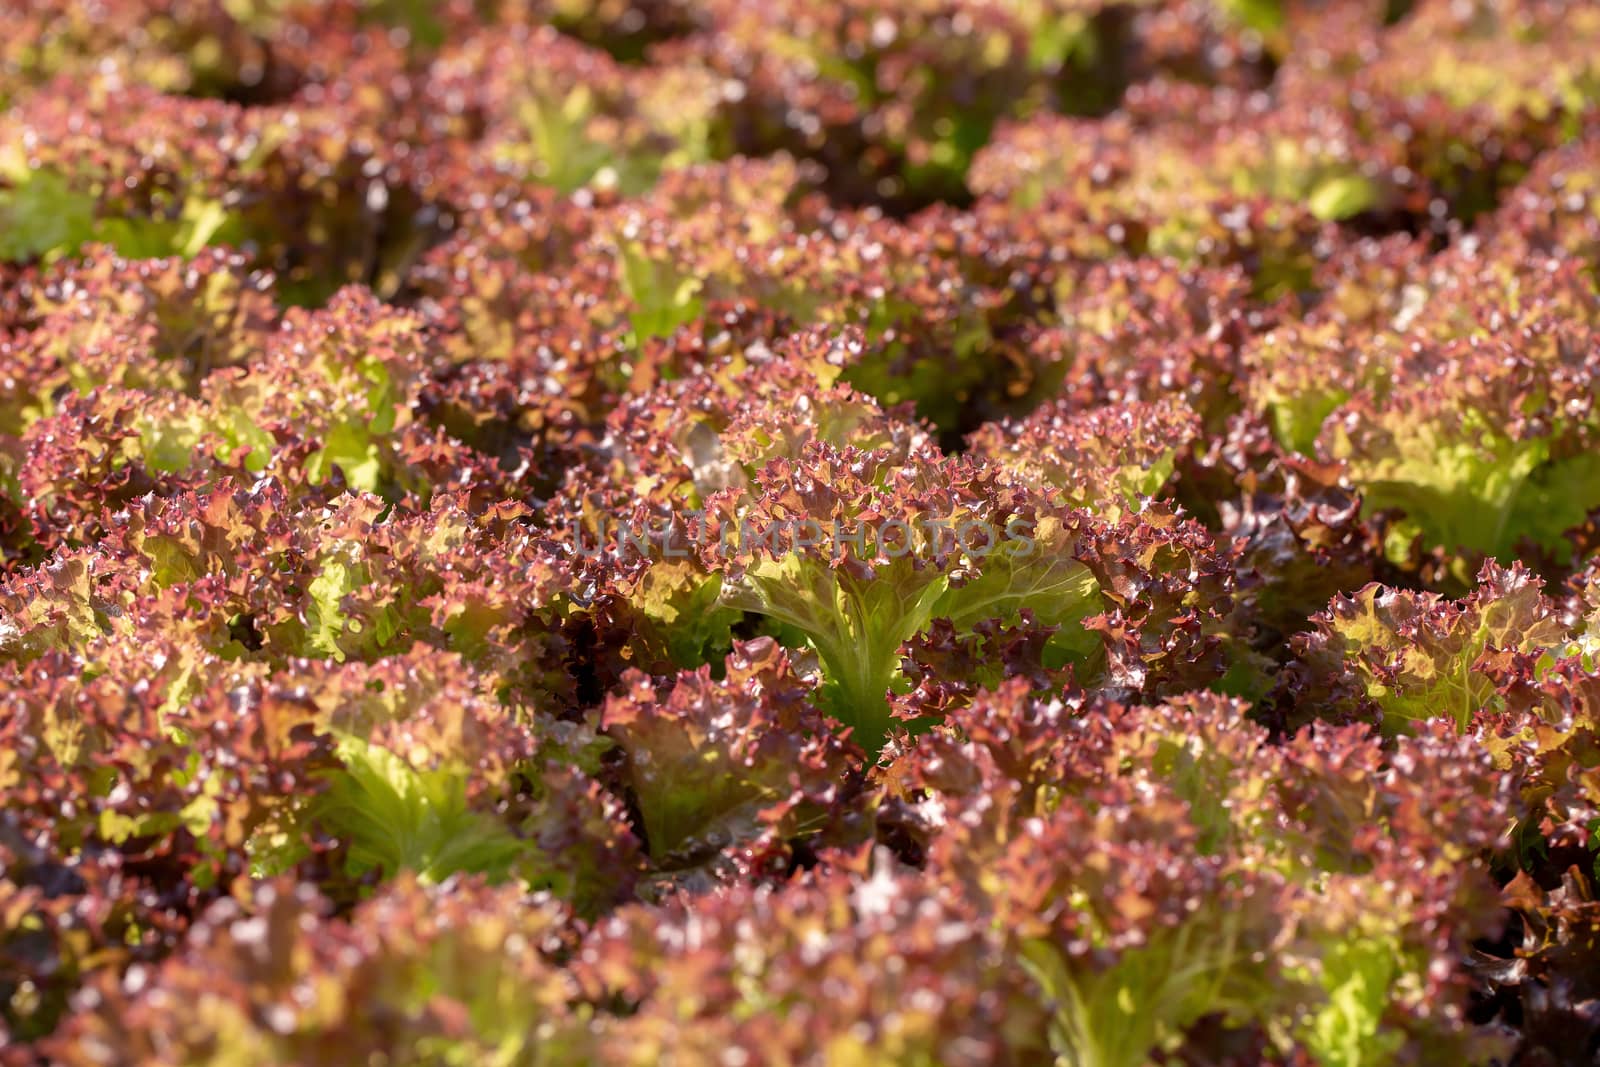 Fresh Red Oak lettuce leaves, Salads vegetable hydroponics farm by kaiskynet